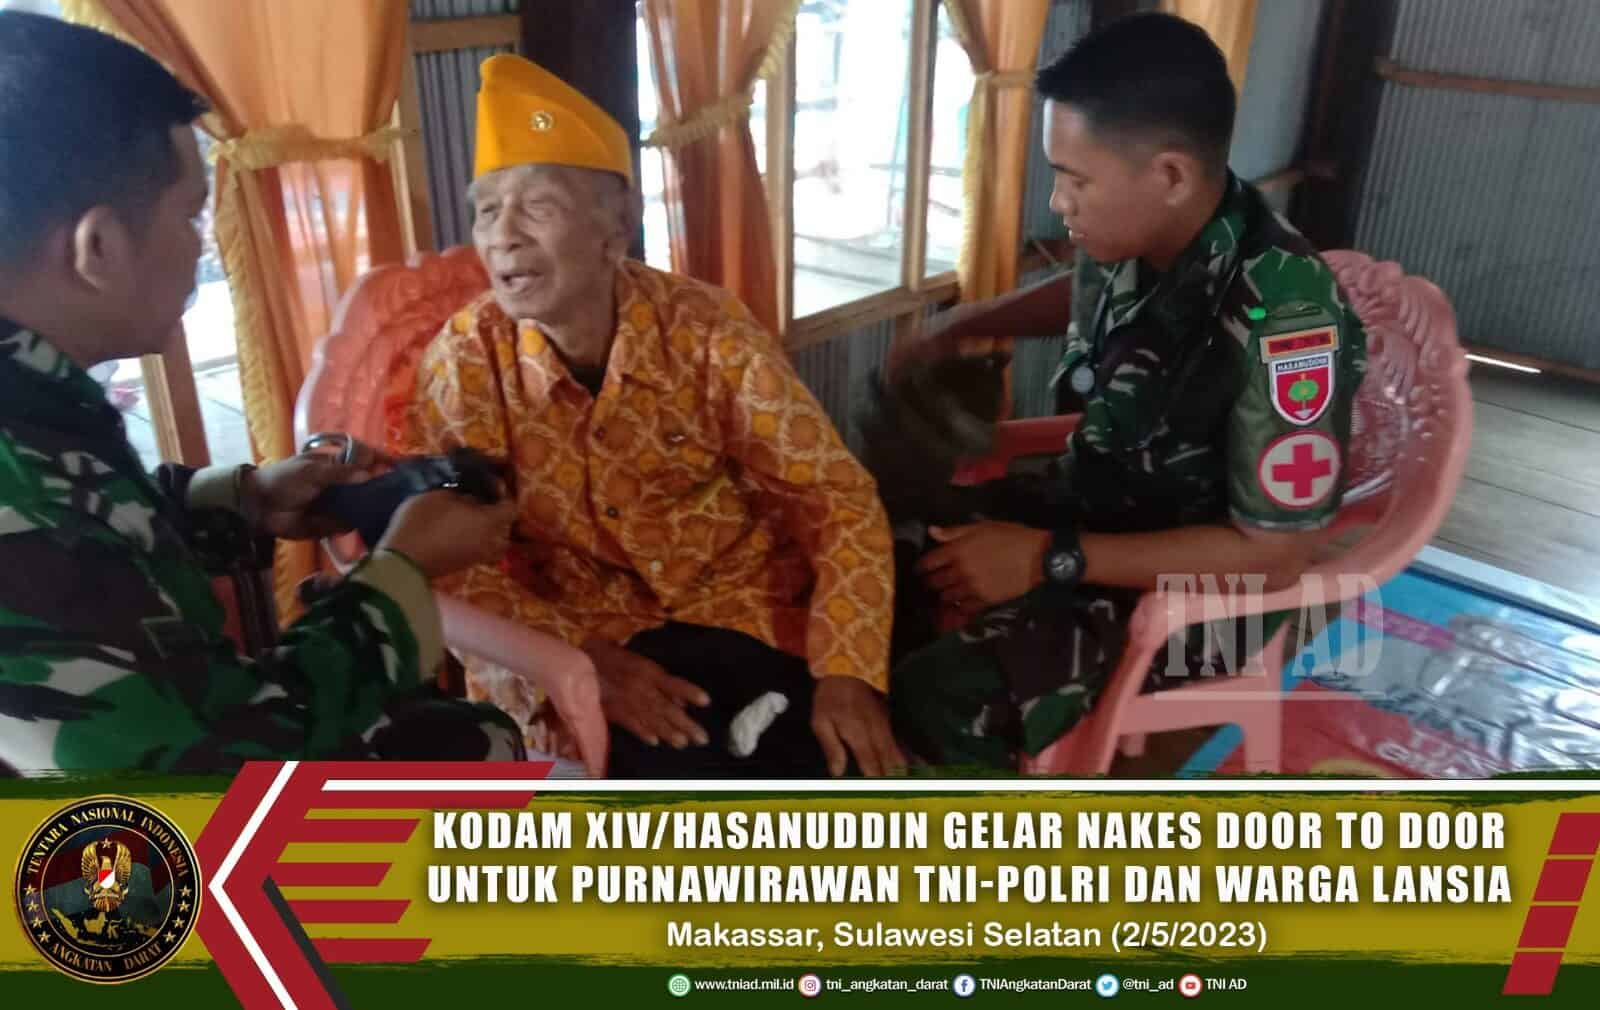 Kodam XIV/ Hasanuddin Gelar Nakes Door To Door Untuk Purnawirawan TNI-Polri dan Warga Lansia